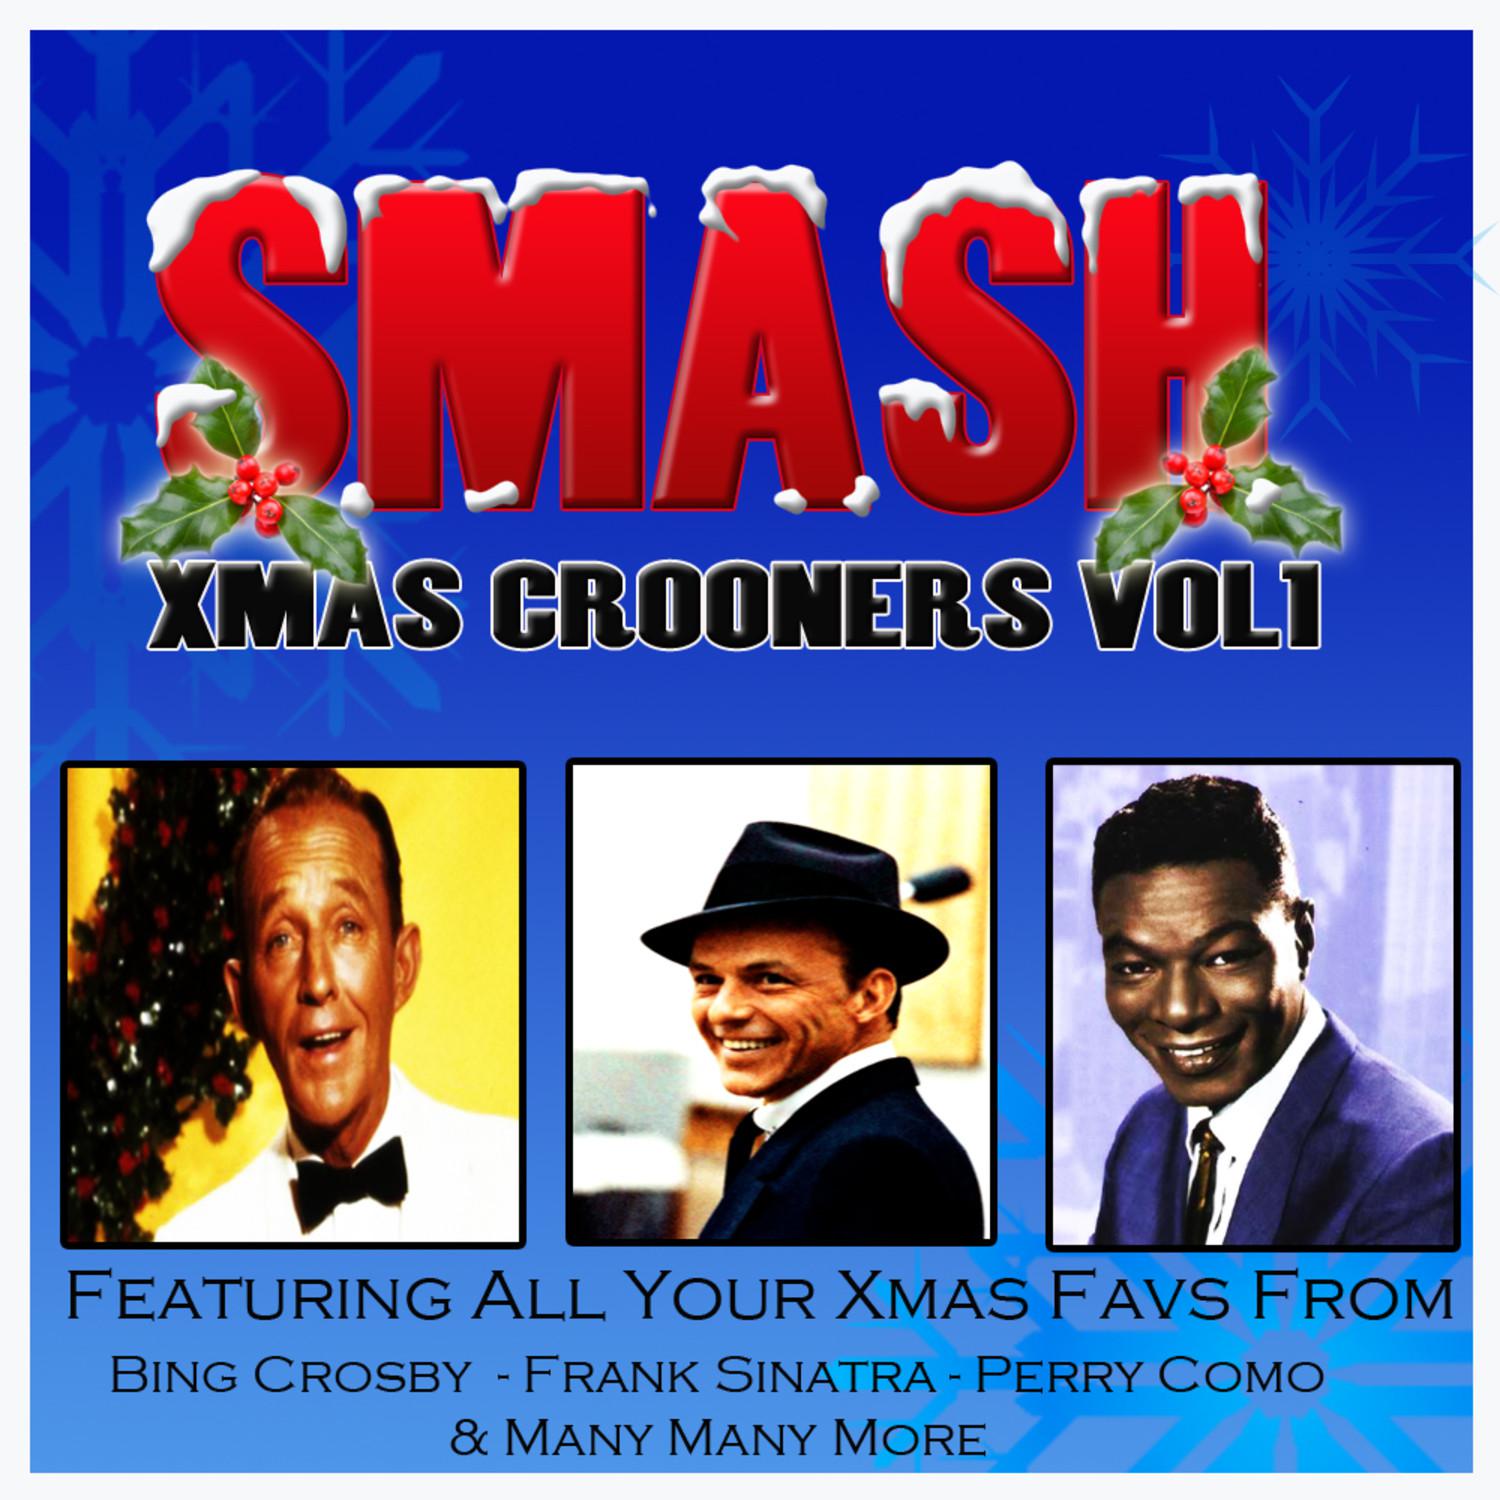 Smash Xmas Crooners, Vol. 1